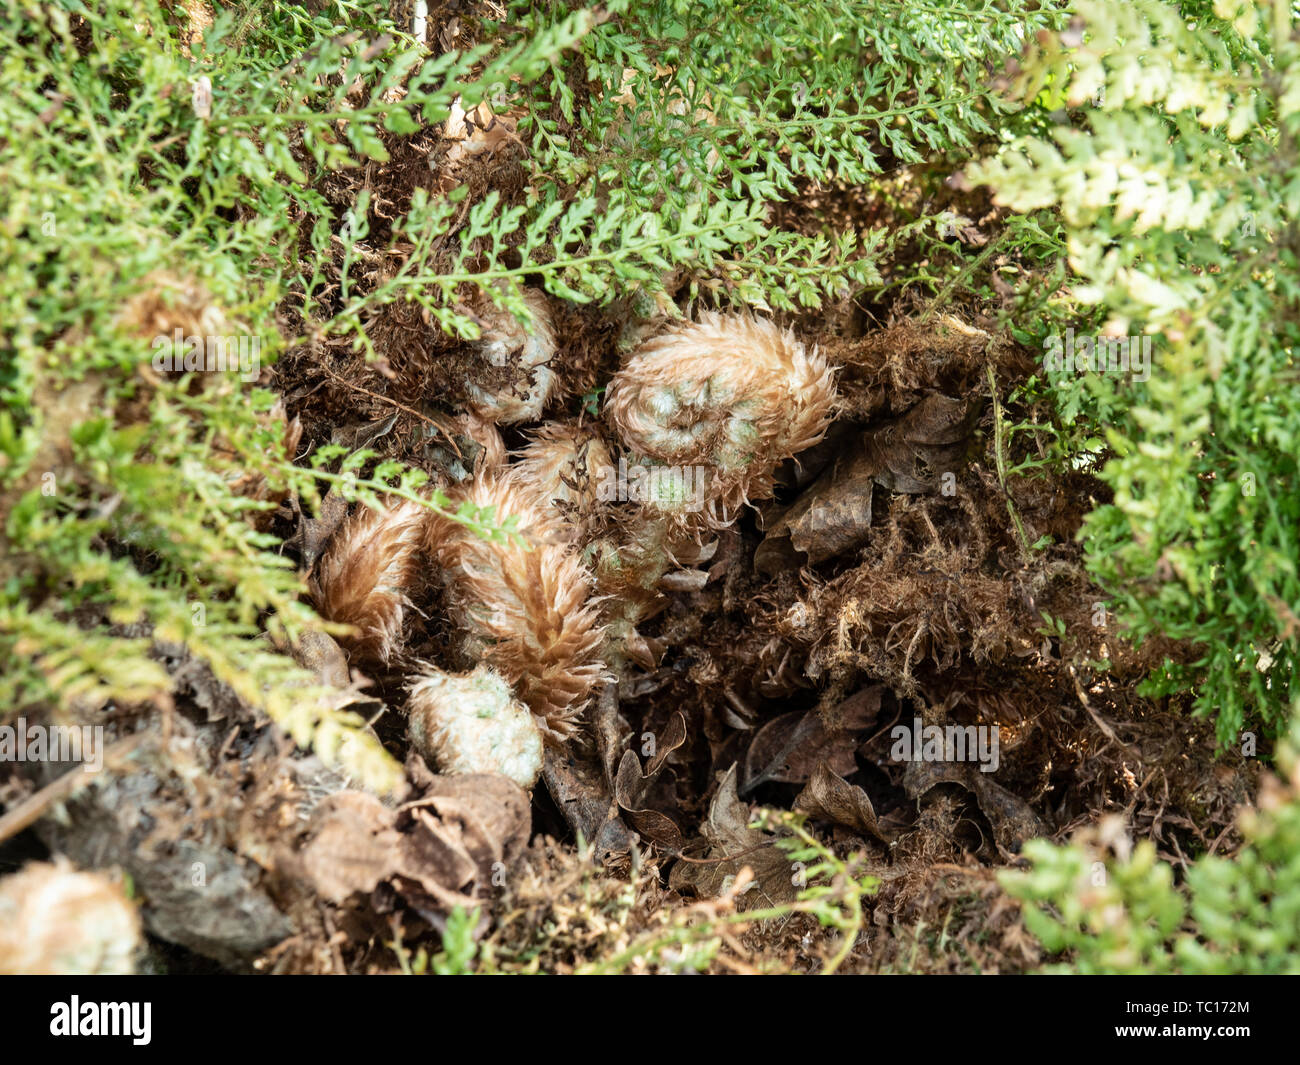 A close up of the unfurling fronds of Polystichum setiferum Plumosomultilobium Group Stock Photo